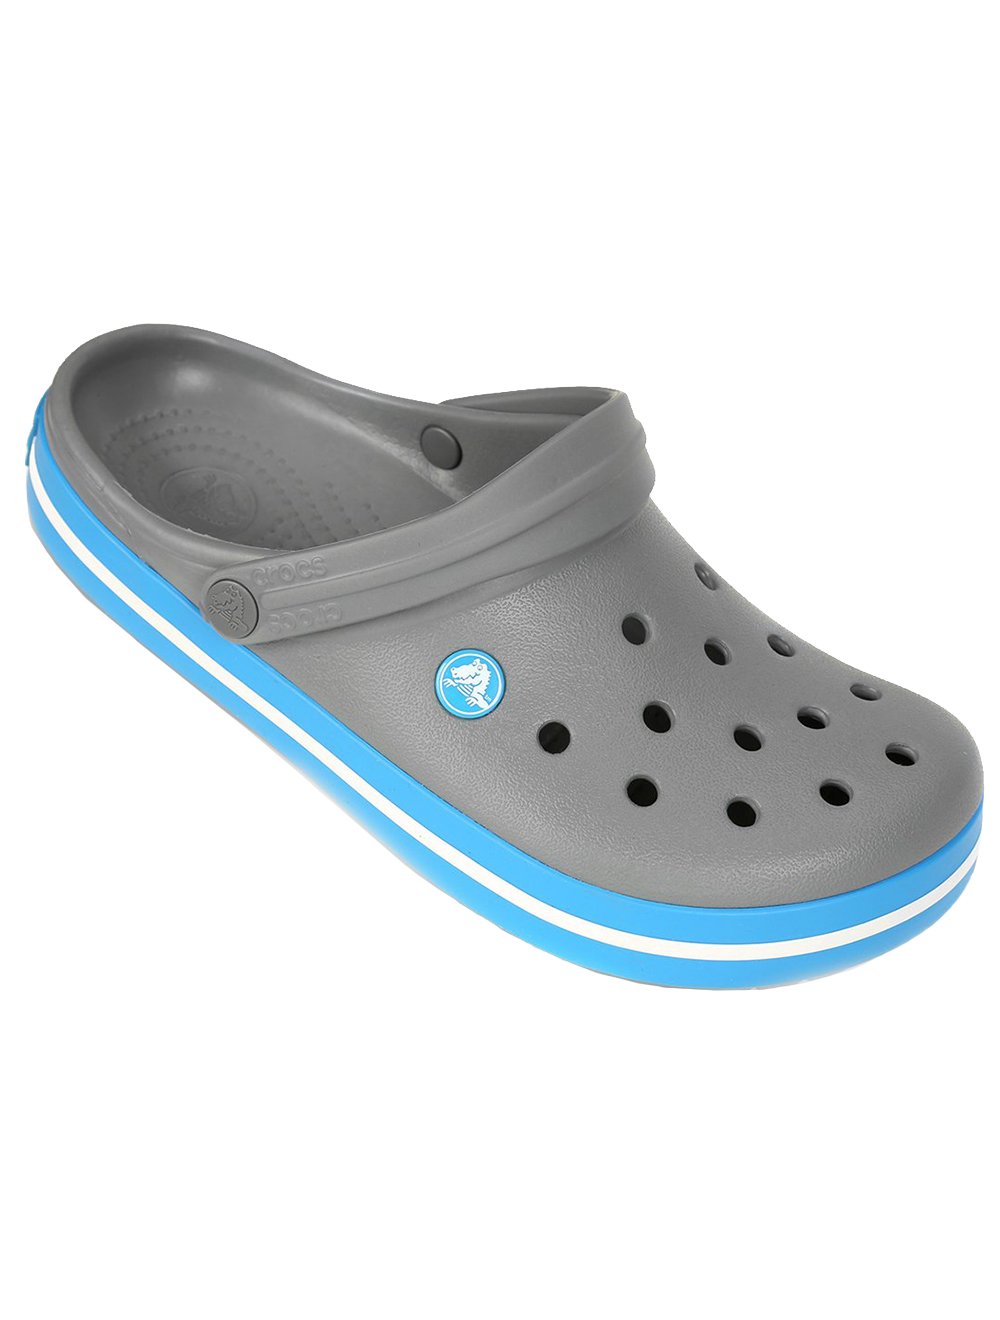 Sandália Crocs Masculina Crocband Clog Cinza Escuro/Azul Claro